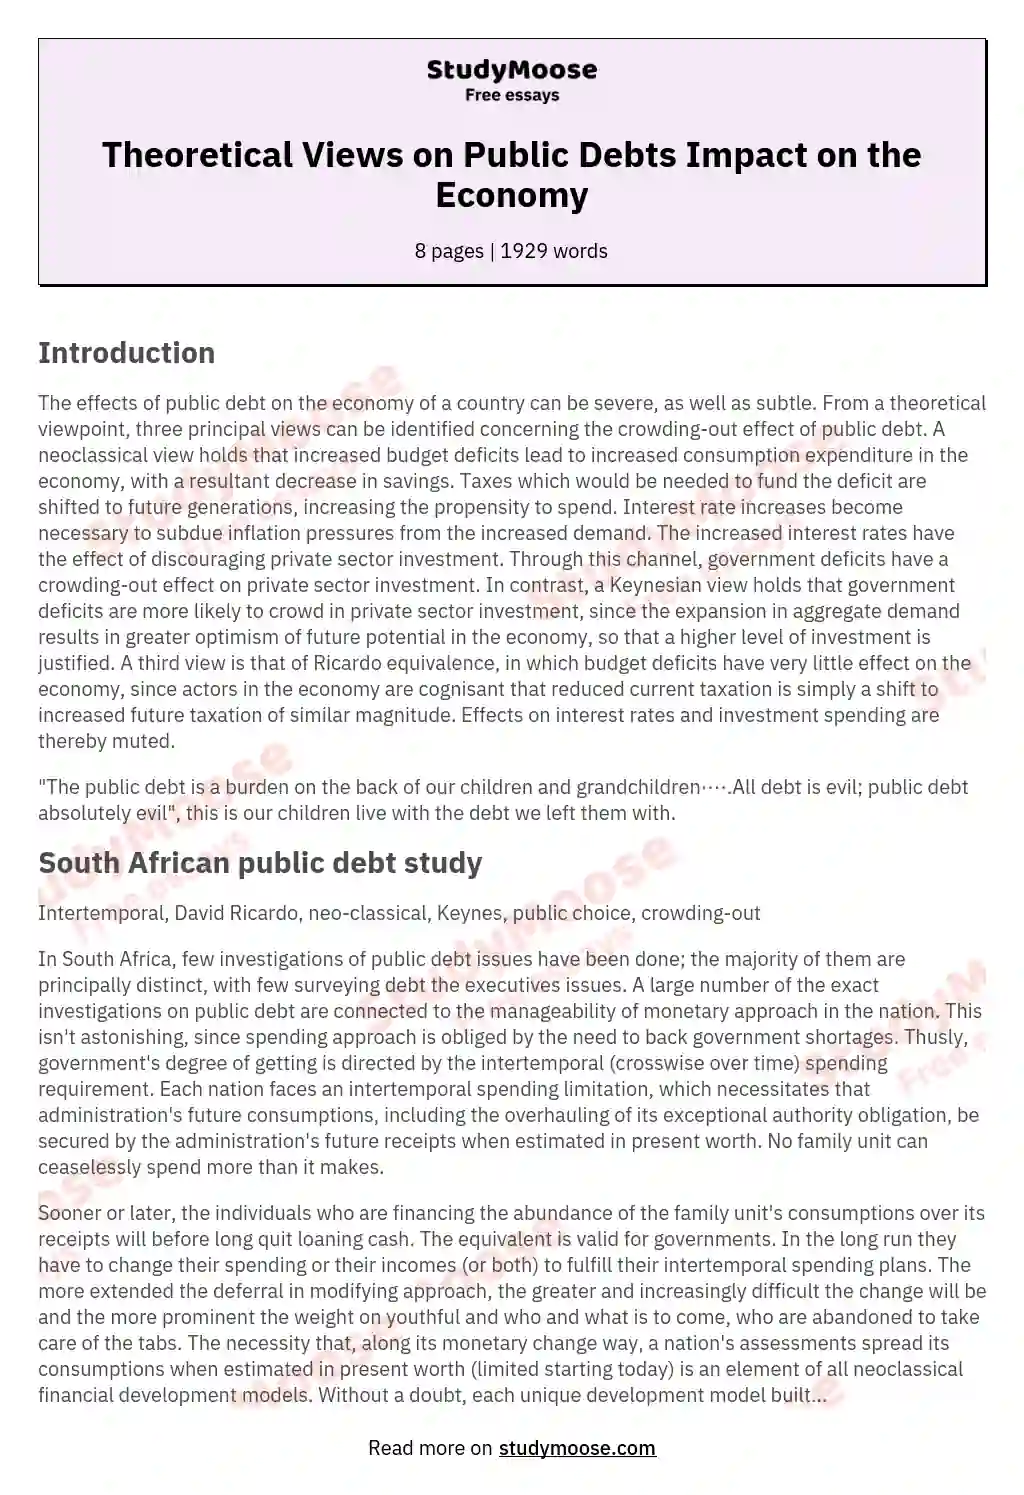 Theoretical Views on Public Debts Impact on the Economy essay